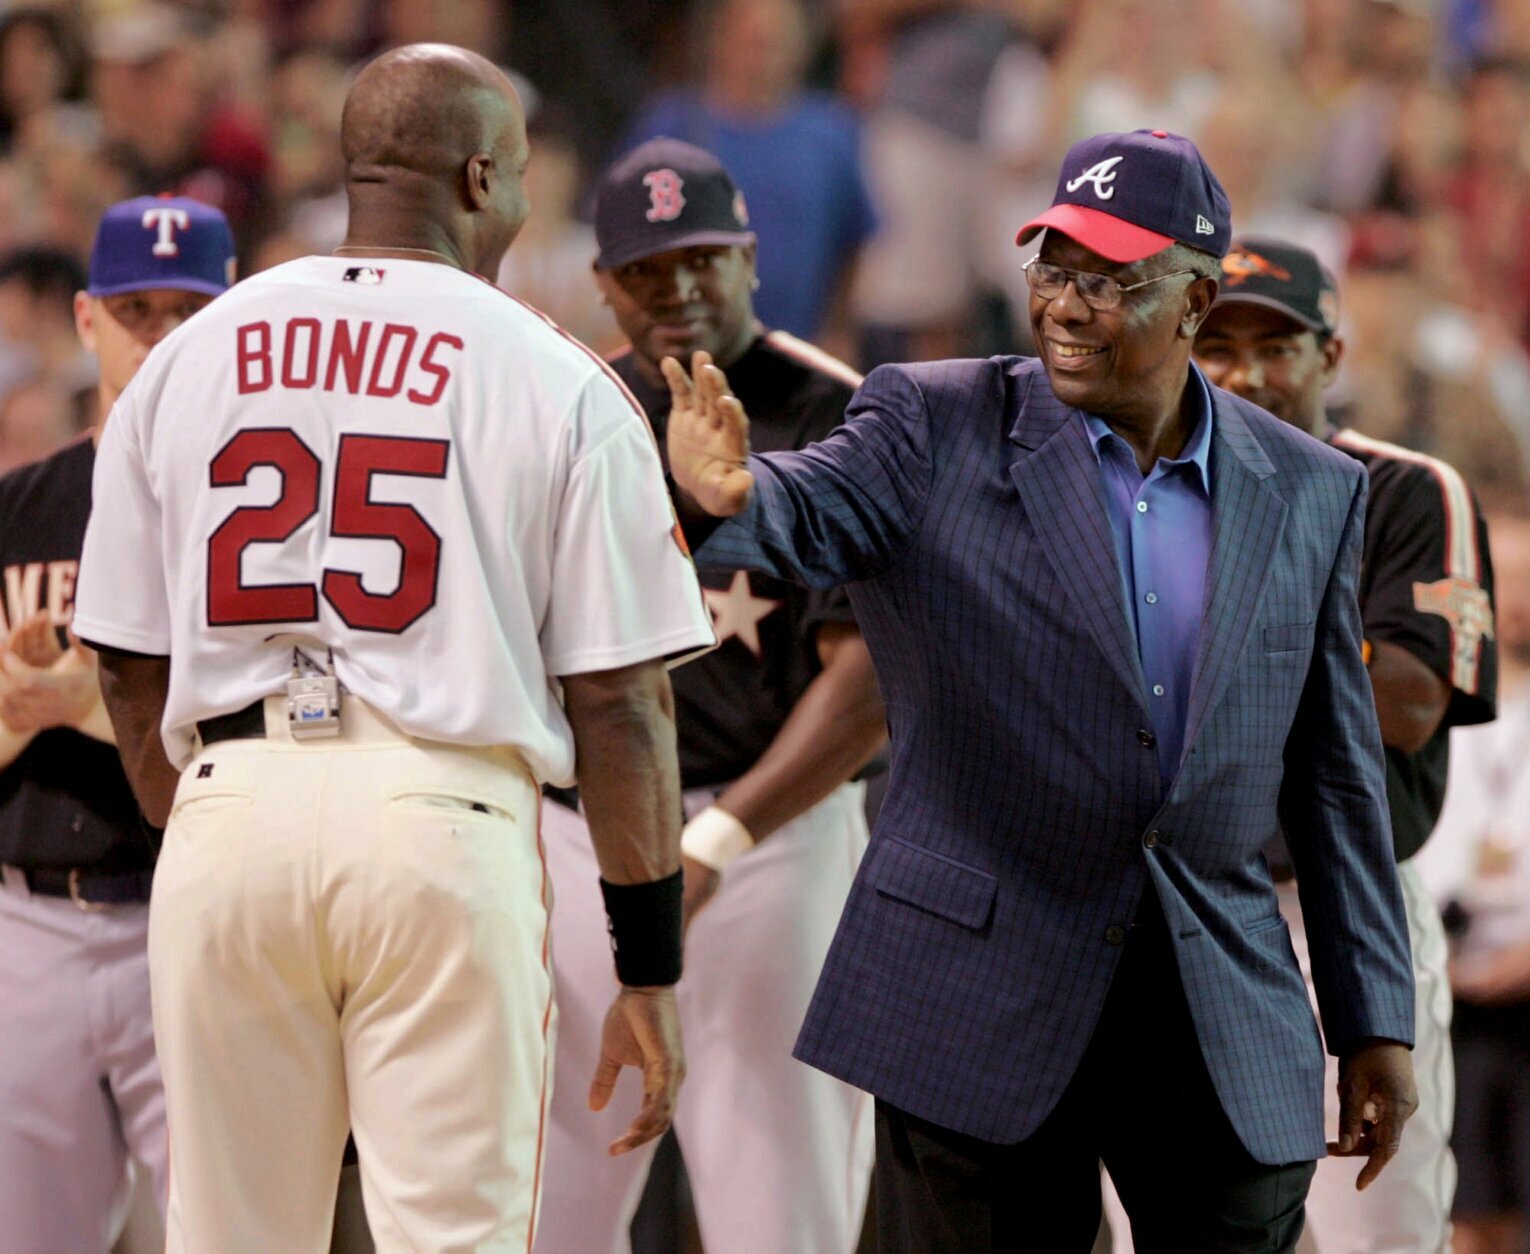 When Atlanta Braves star Chipper Jones chose integrity over PEDs to  progress in his baseball career